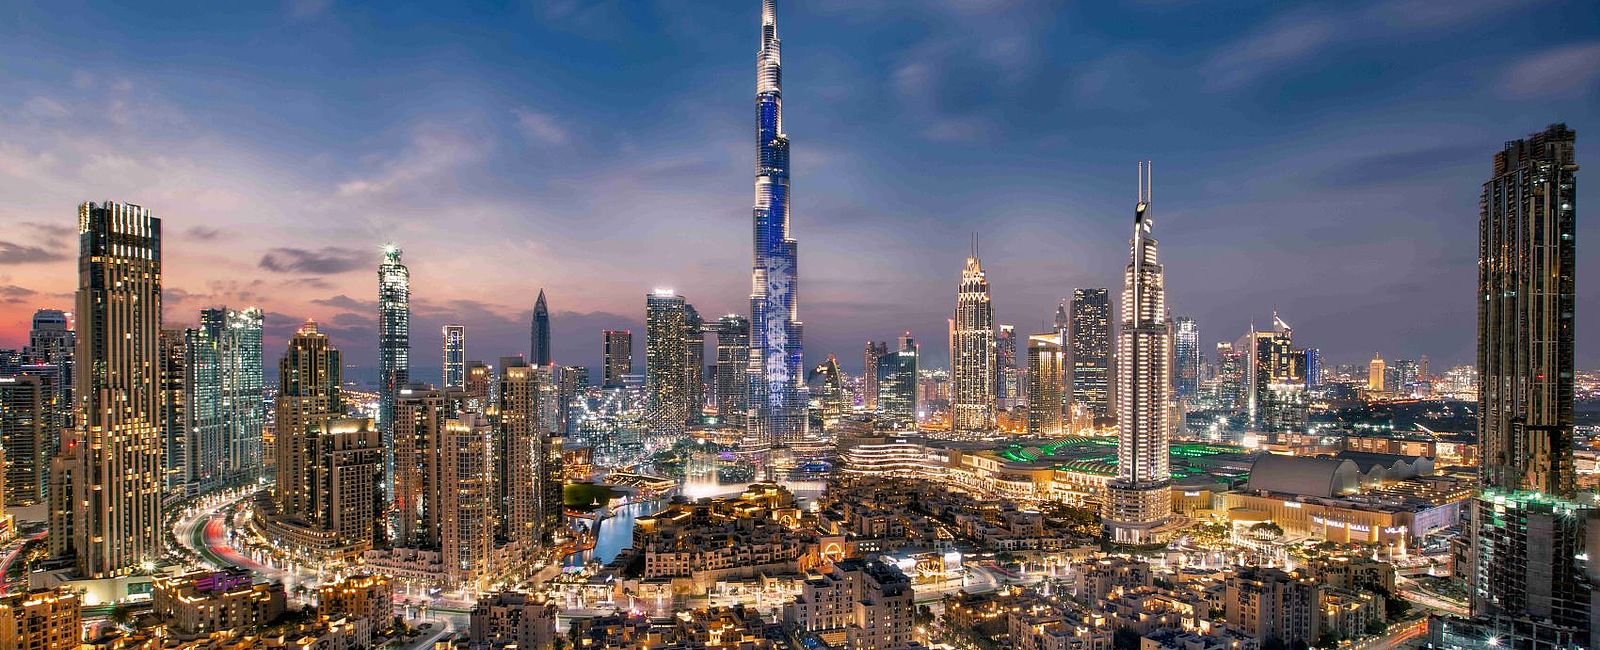 AIRLINE NEWS
 Eurowings fliegt im Winter wieder nach Dubai  
